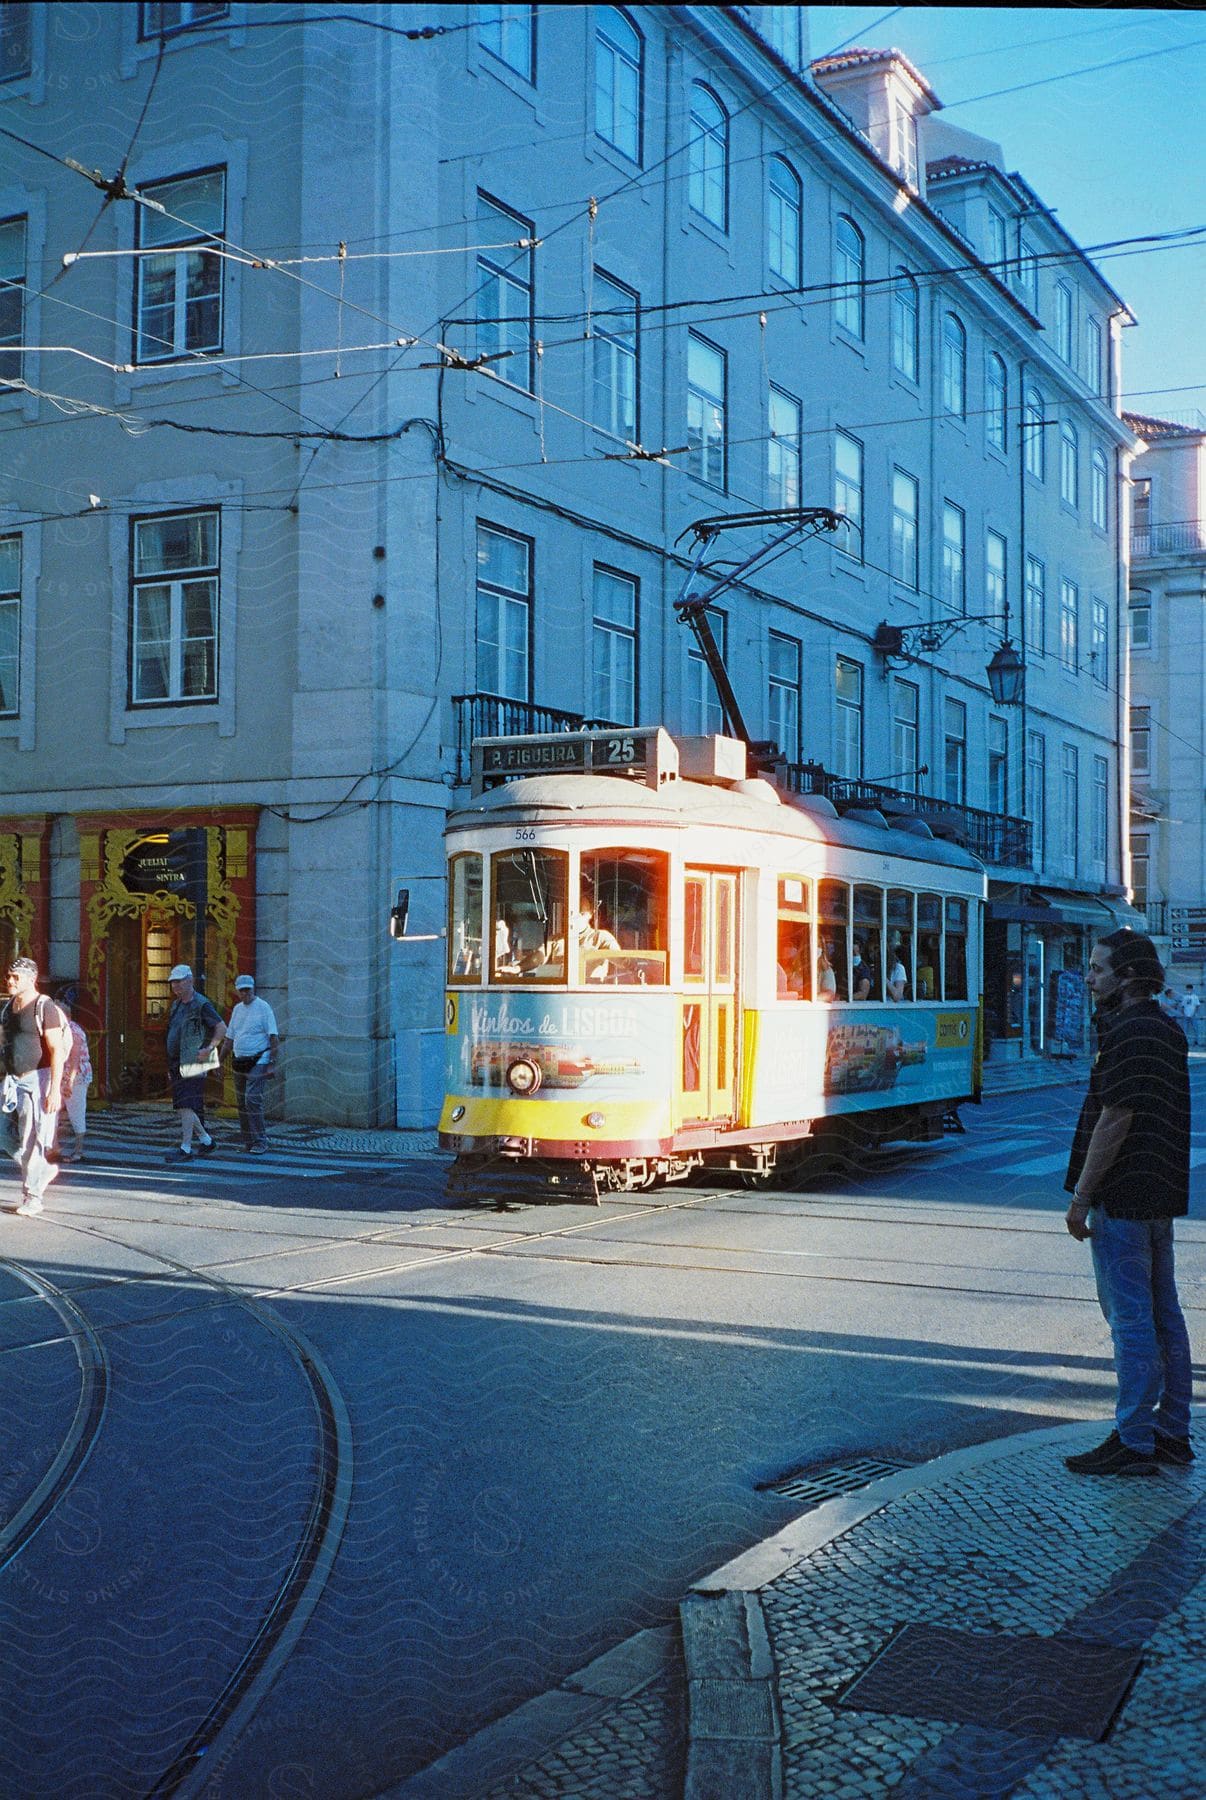 A trolley drives down a city street in lisbon portugal